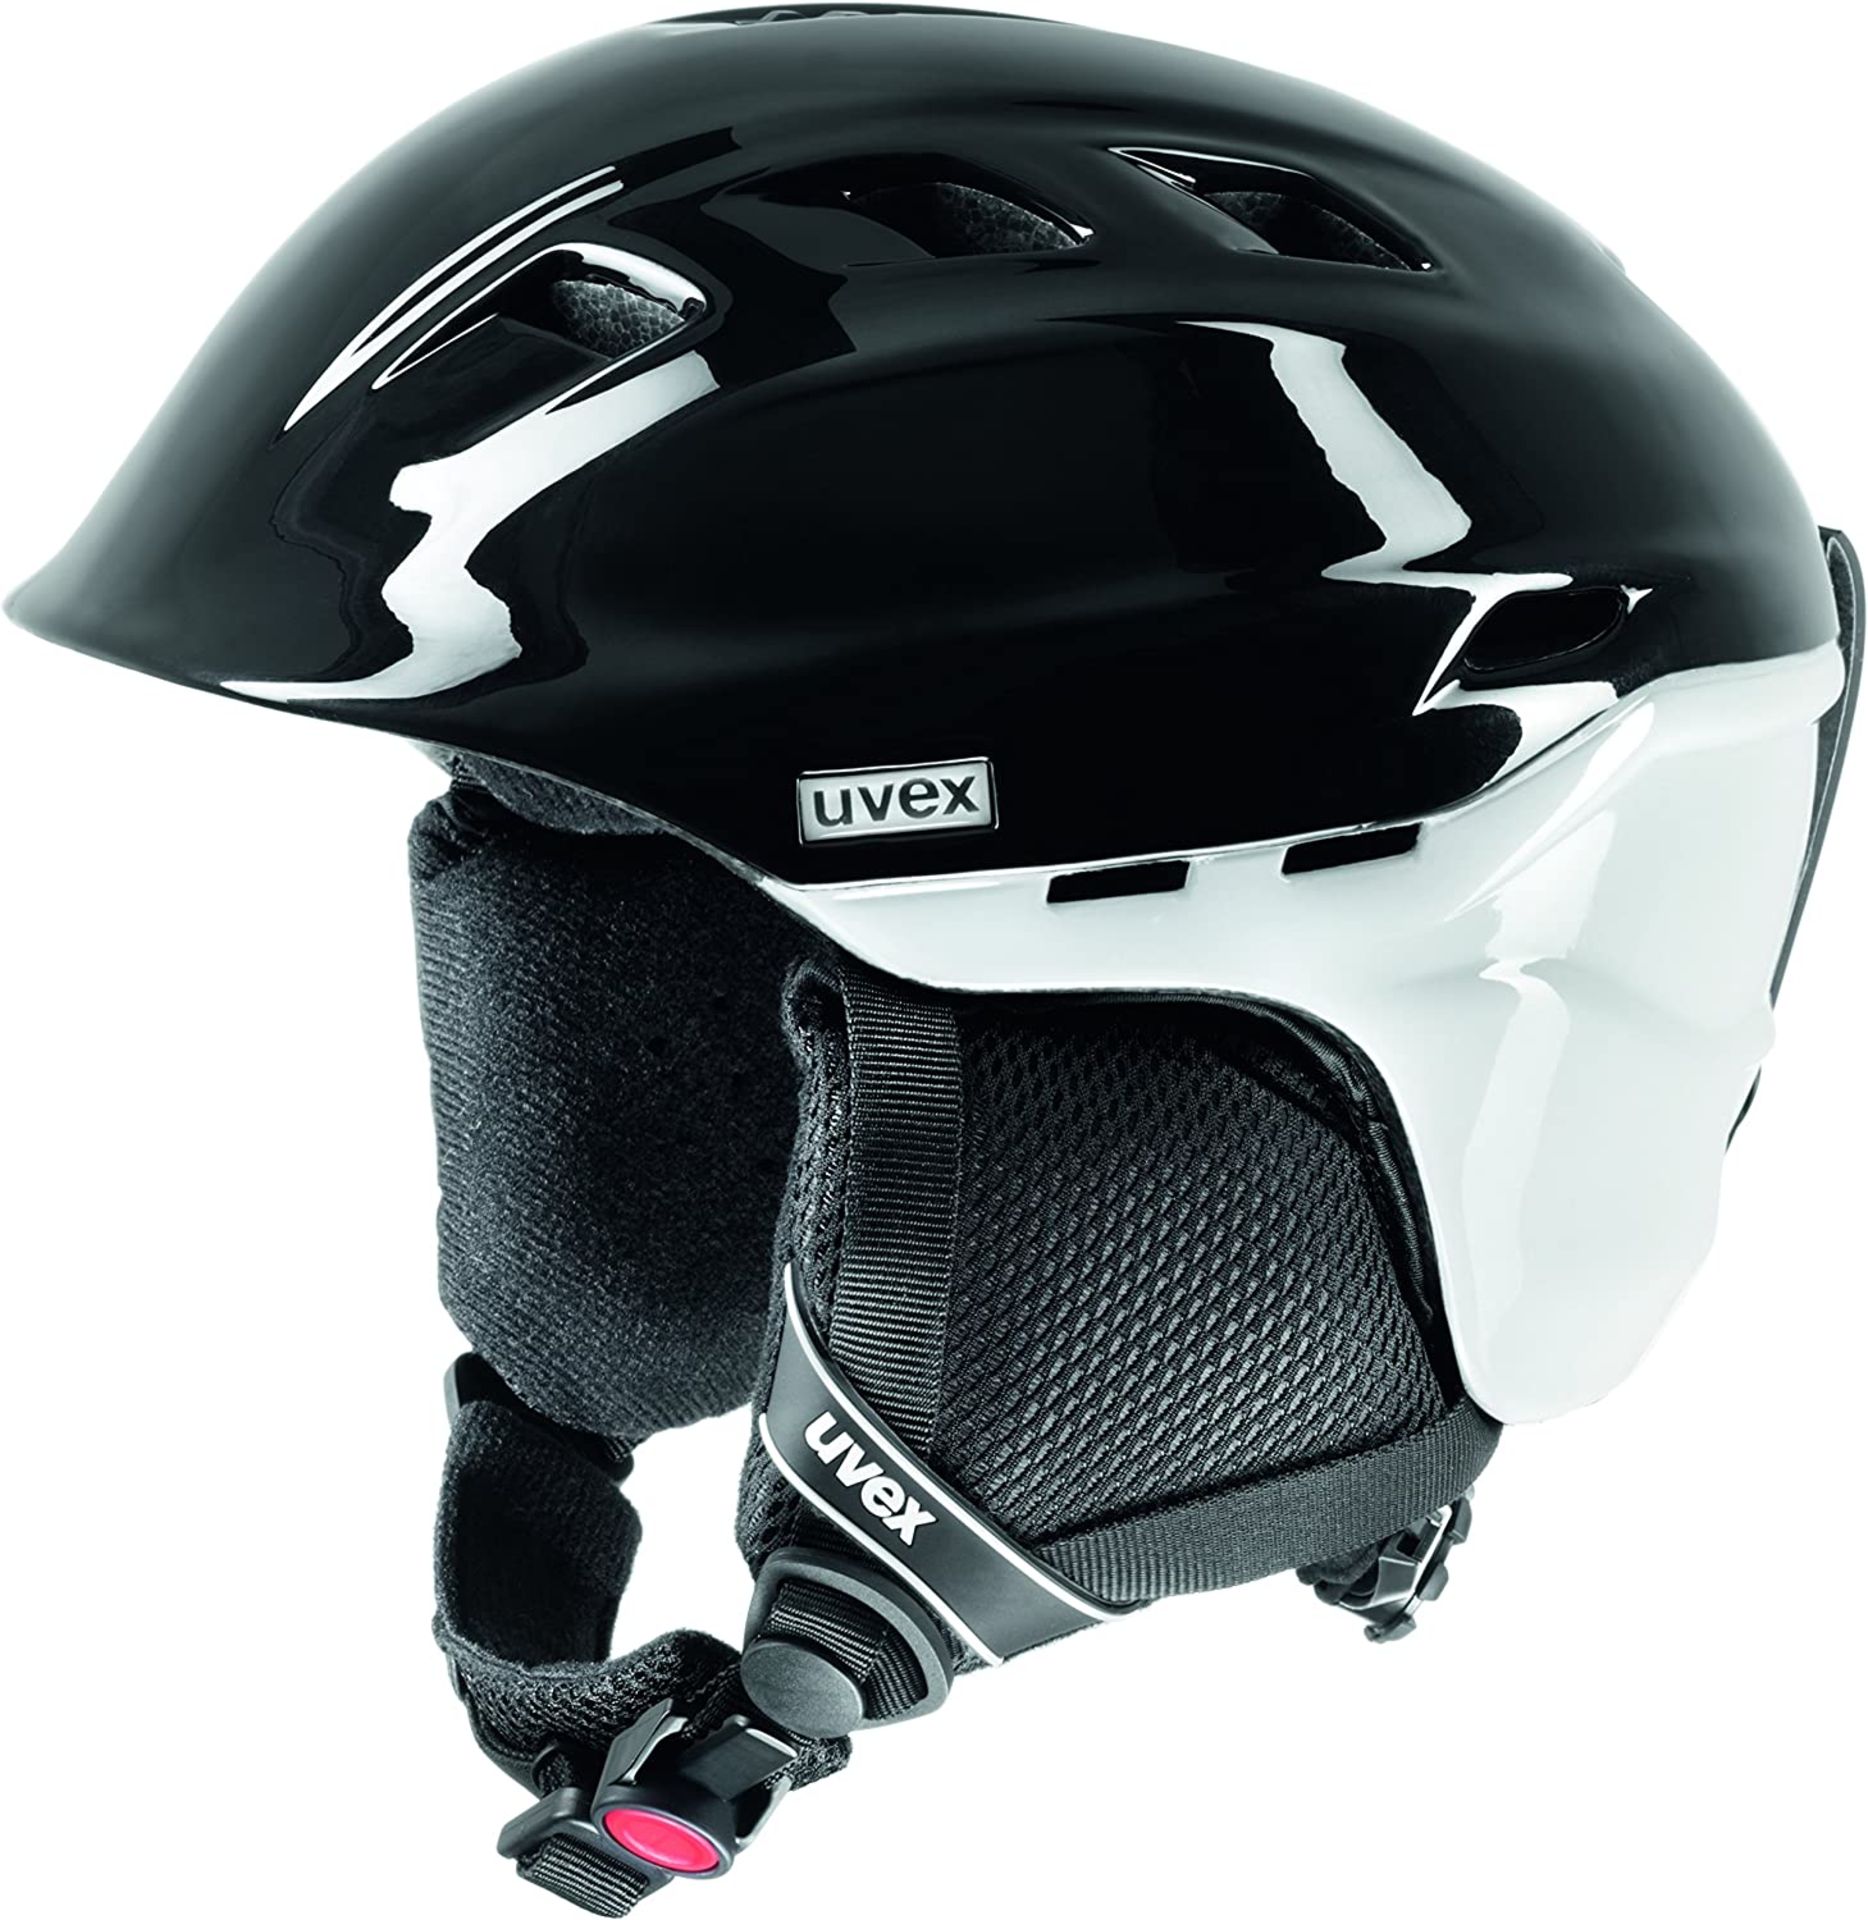 RRP £39.99 - New Uvex Kids & Womes Adjustable Size Helmet, Bike, Scooter, Skiing Etc